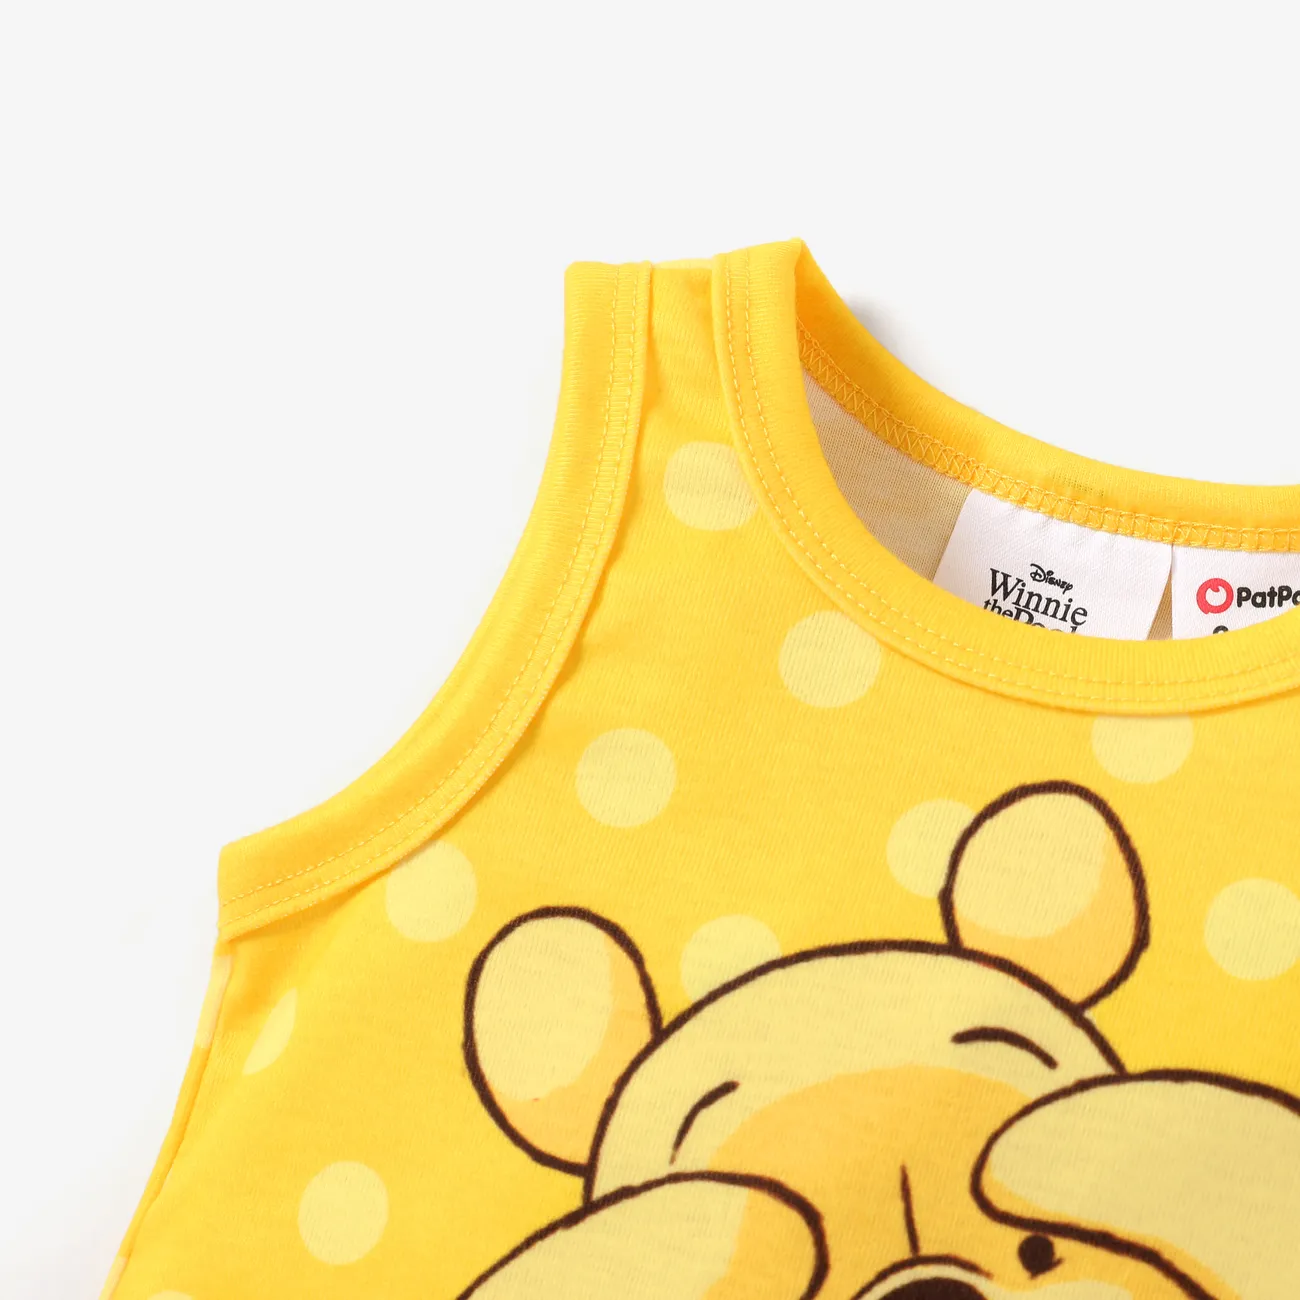 Disney Winnie the Pooh Unissexo Infantil Macacão curto luz amarela big image 1